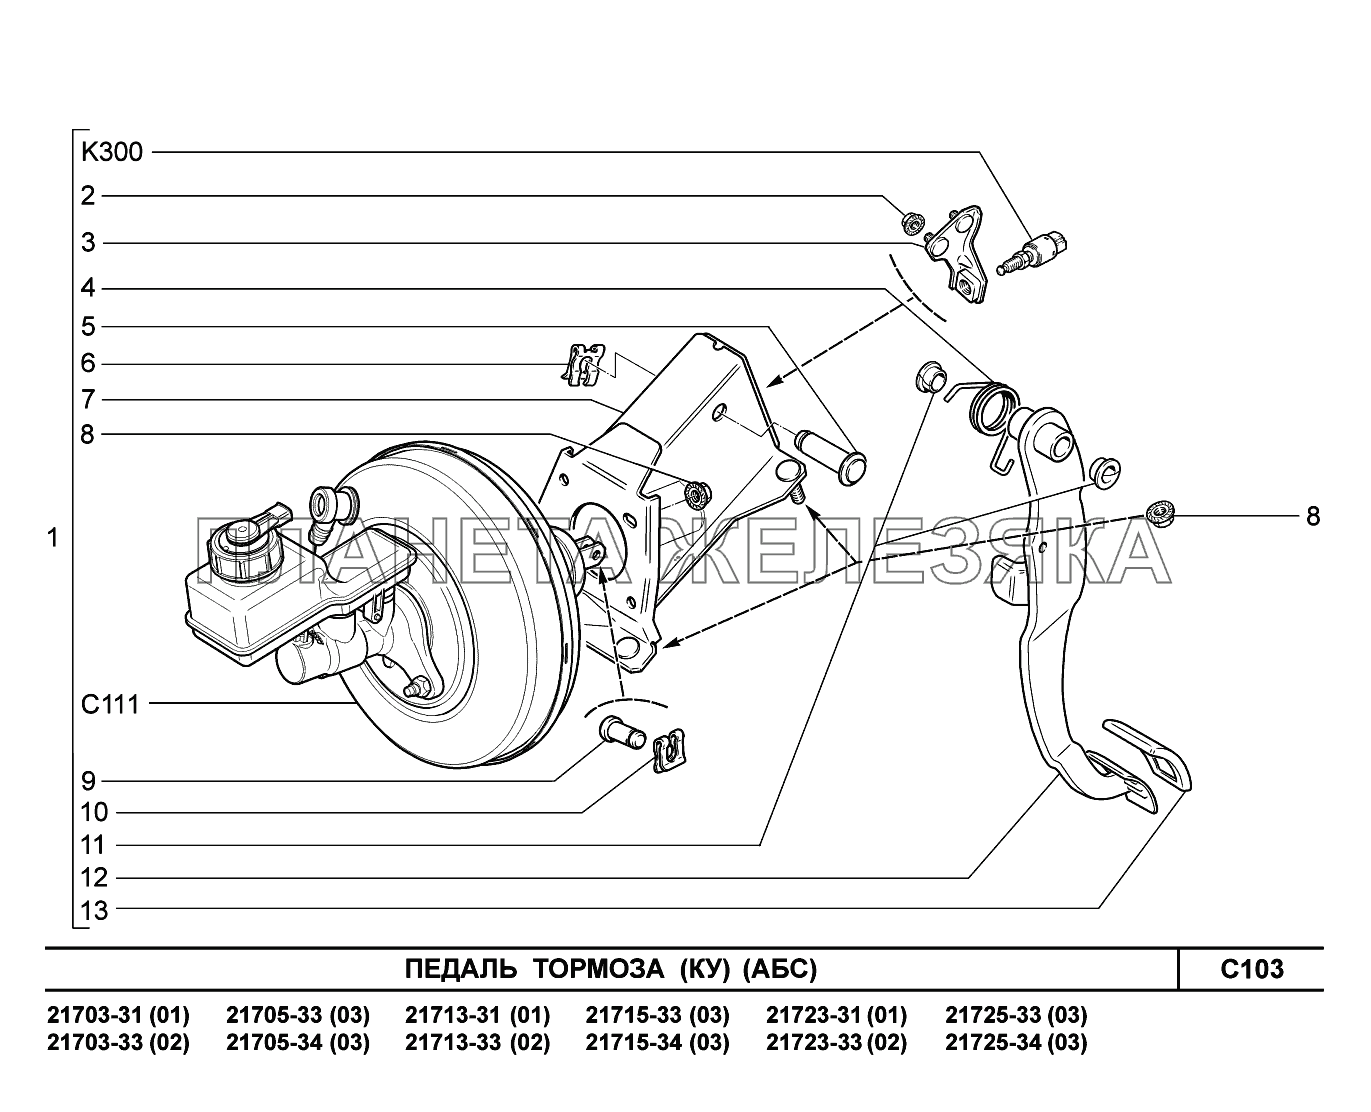 C103. Педаль тормоза ВАЗ-2170 